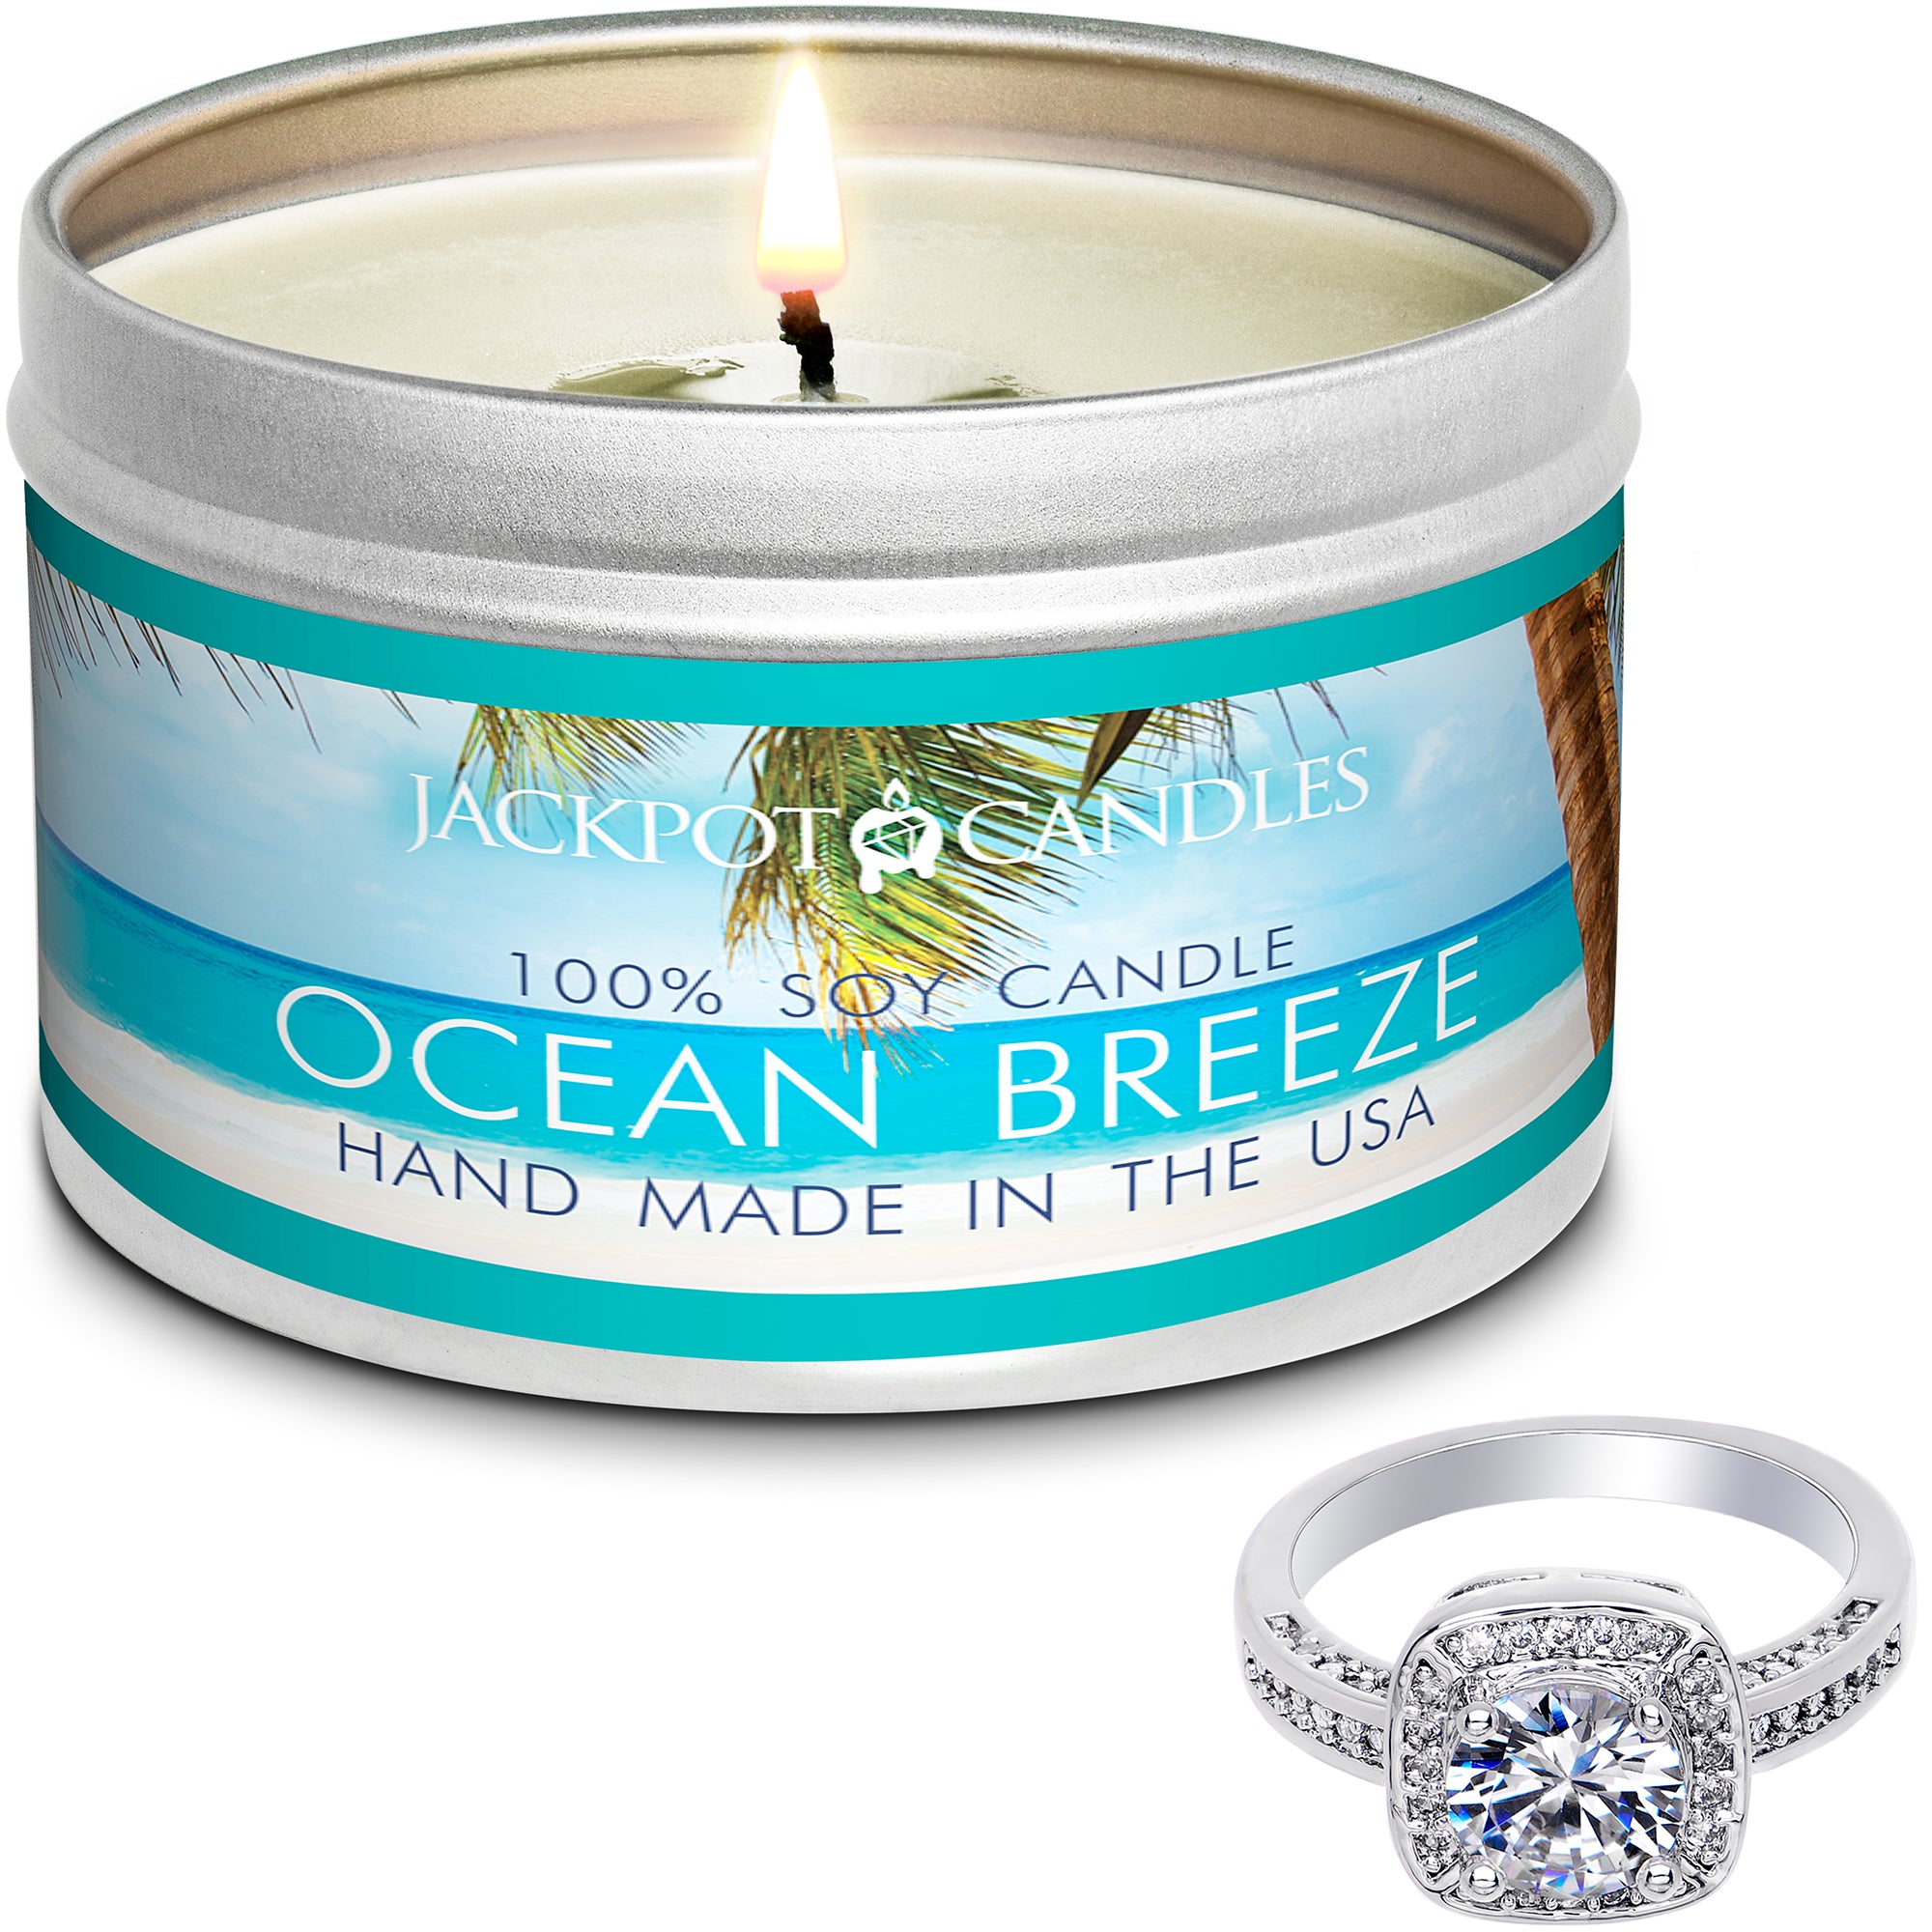 Ocean Breeze Candle Travel Tin